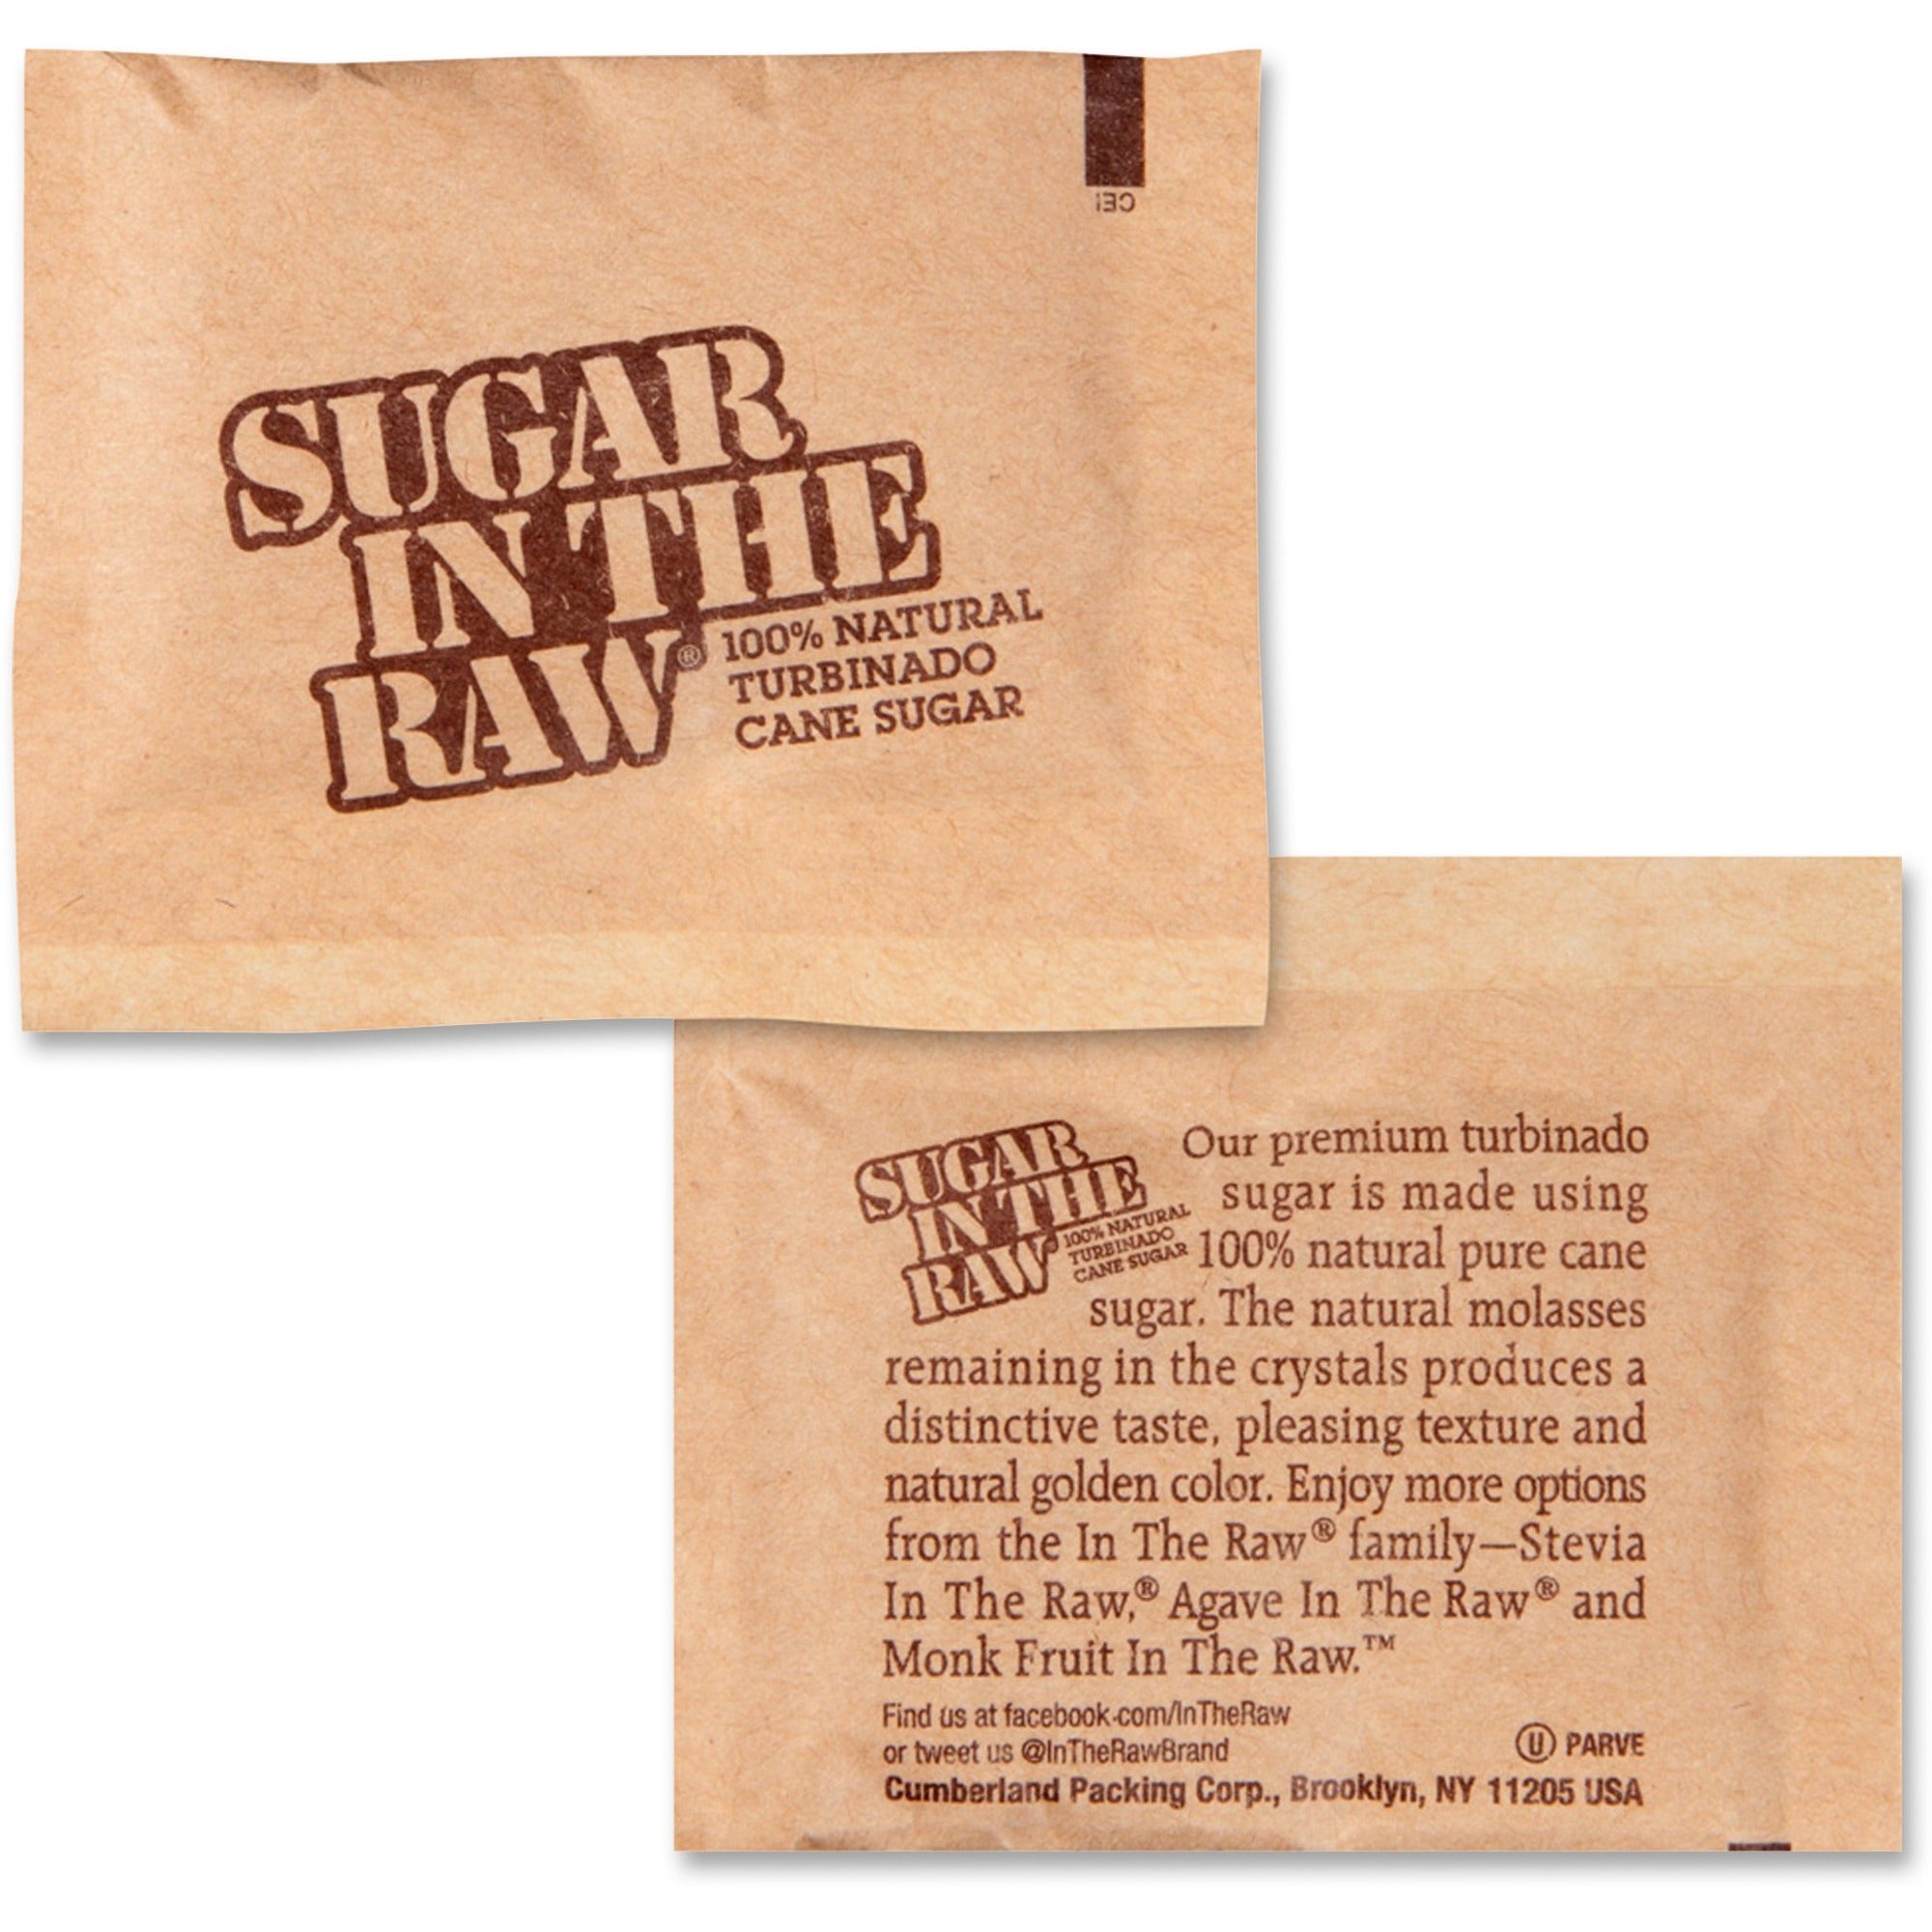 sugar-in-the-raw-turbinado-cane-sugar-natural-sweetener-400-carton_smu50390 - 1